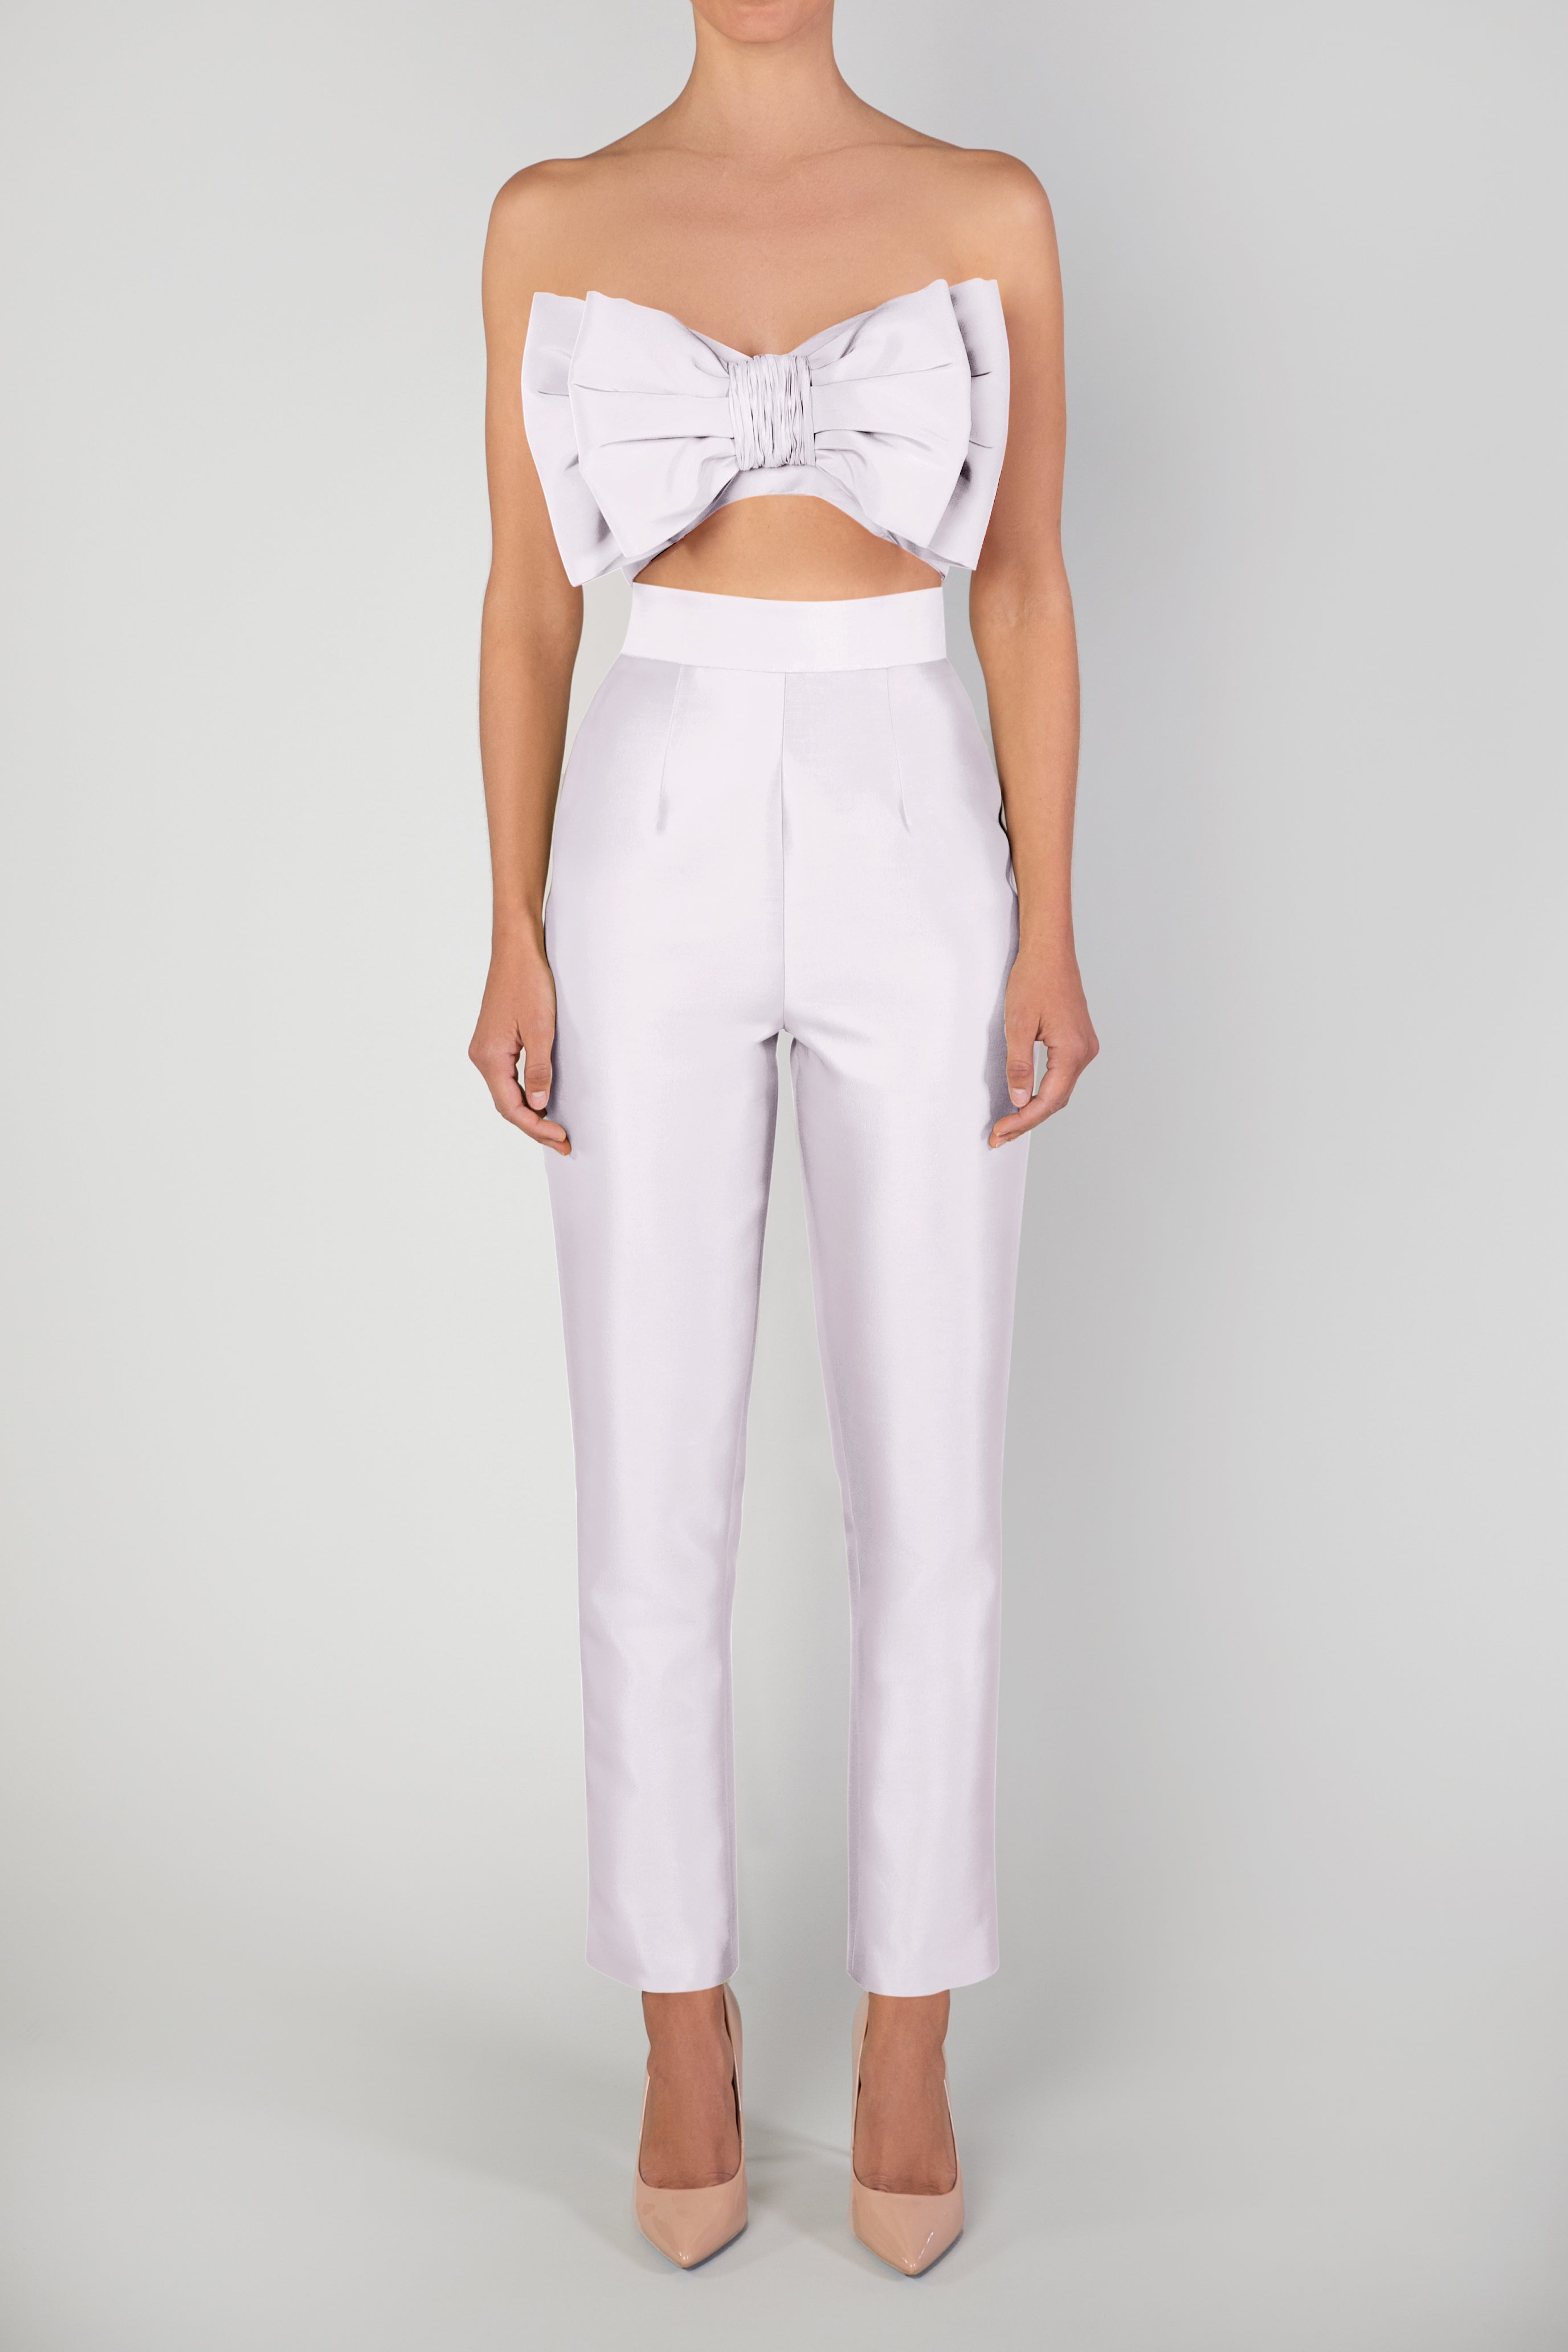 Glossia Fashion Albescent white High Rise Formal Tapered Cigarette Trousers  for Women - 82674